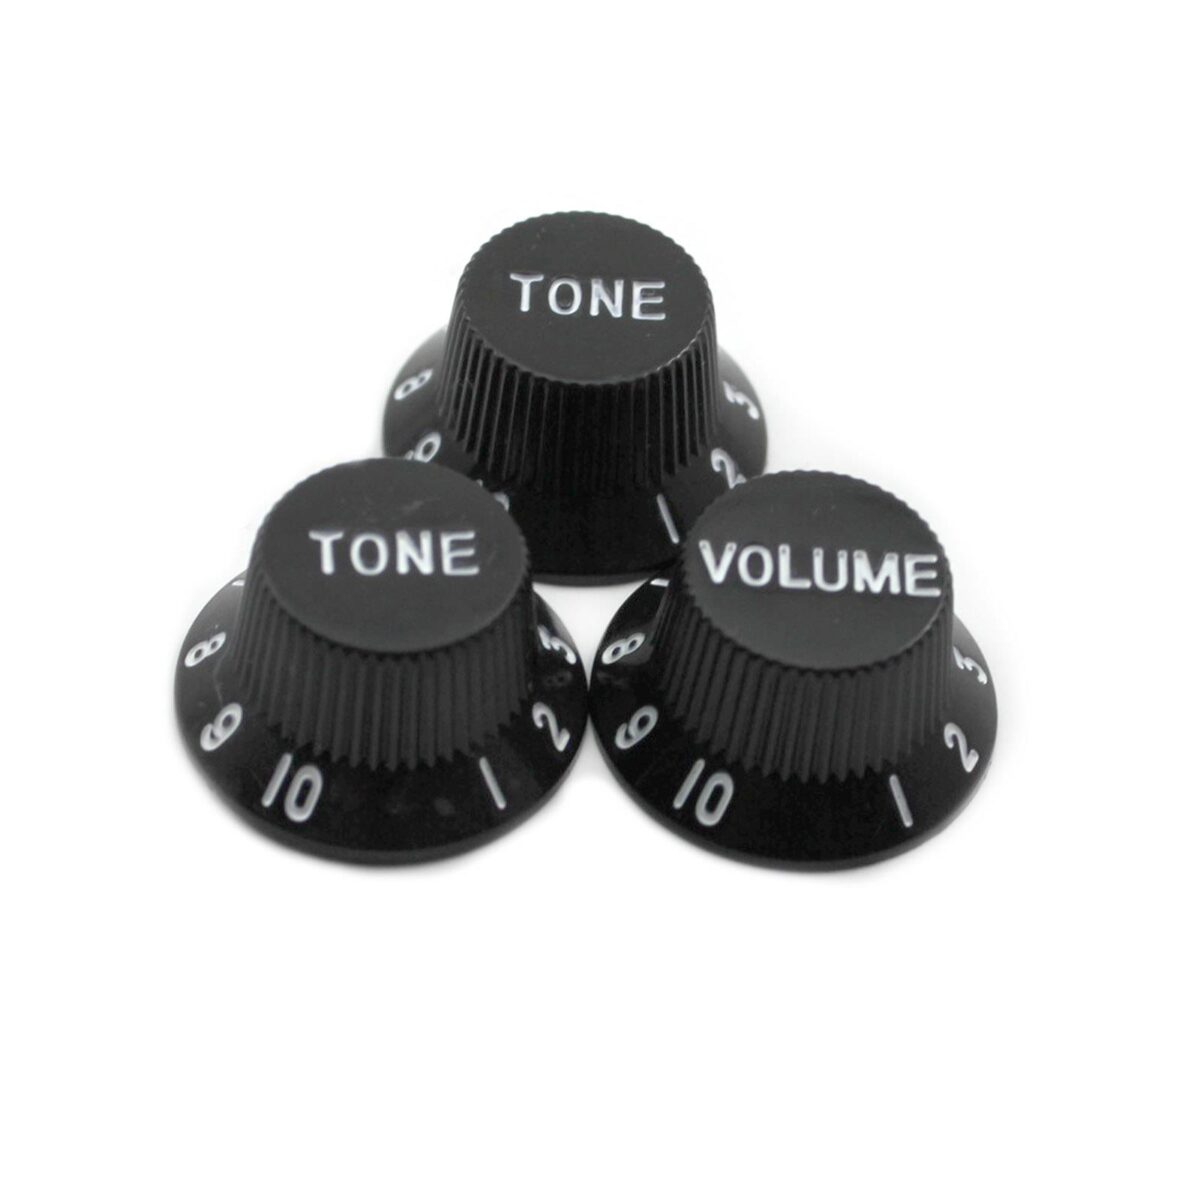 kapice volume tone 1